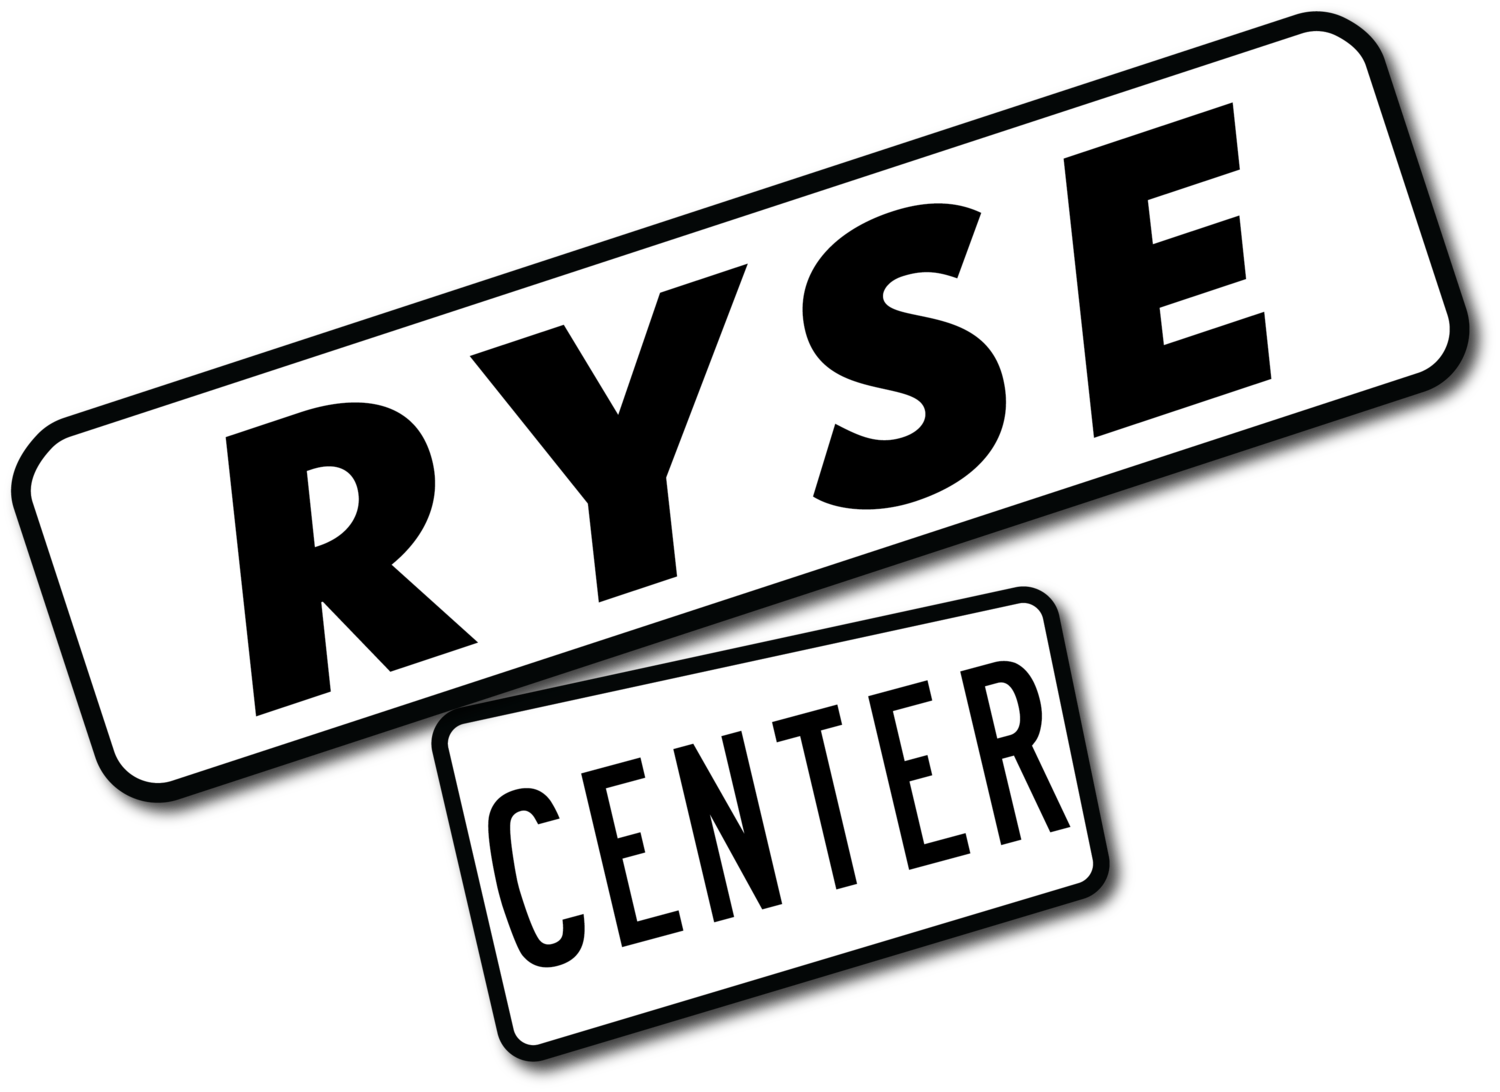 RYSE Center